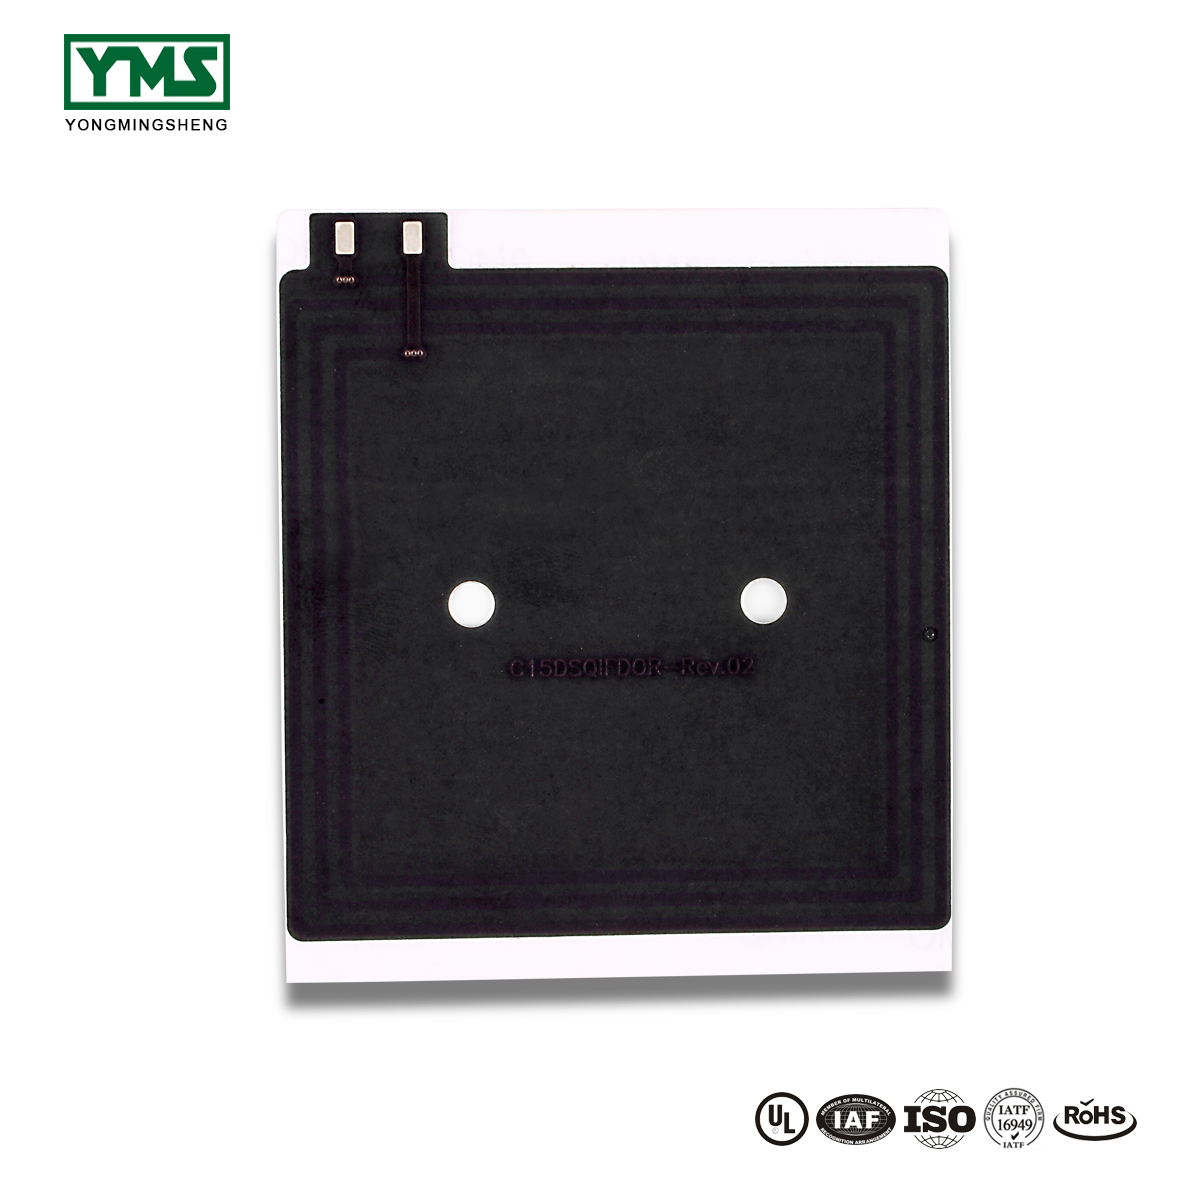 Reasonable price Flex-Rigid Board - 1Layer Black solder mask Flexible Board | YMSPCB – Yongmingsheng